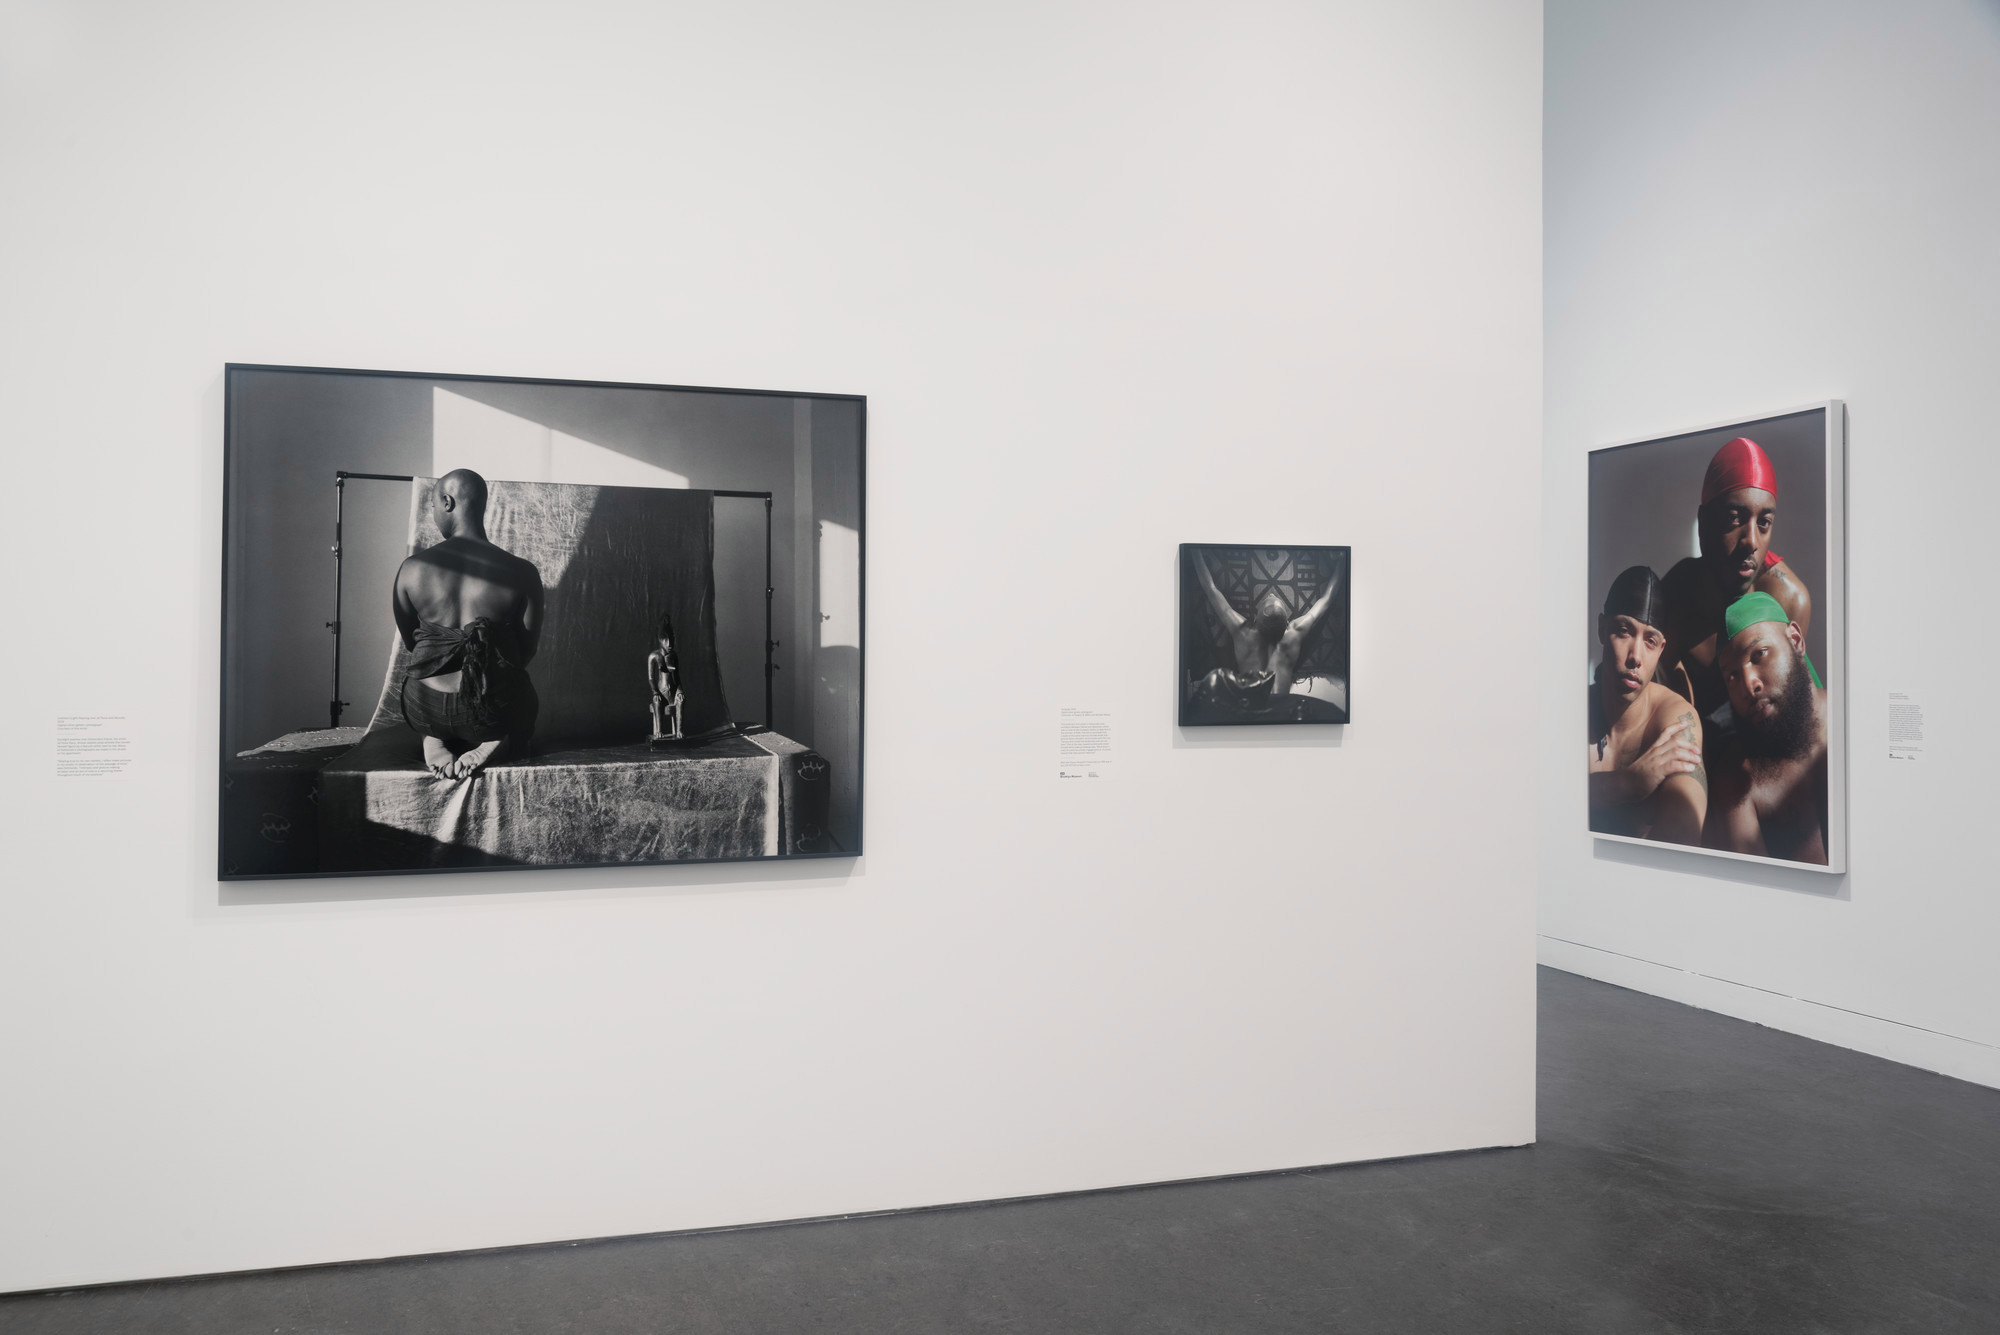 John Edmonds' exhibition "A Sidelong Glance" at the Brooklyn Museum.